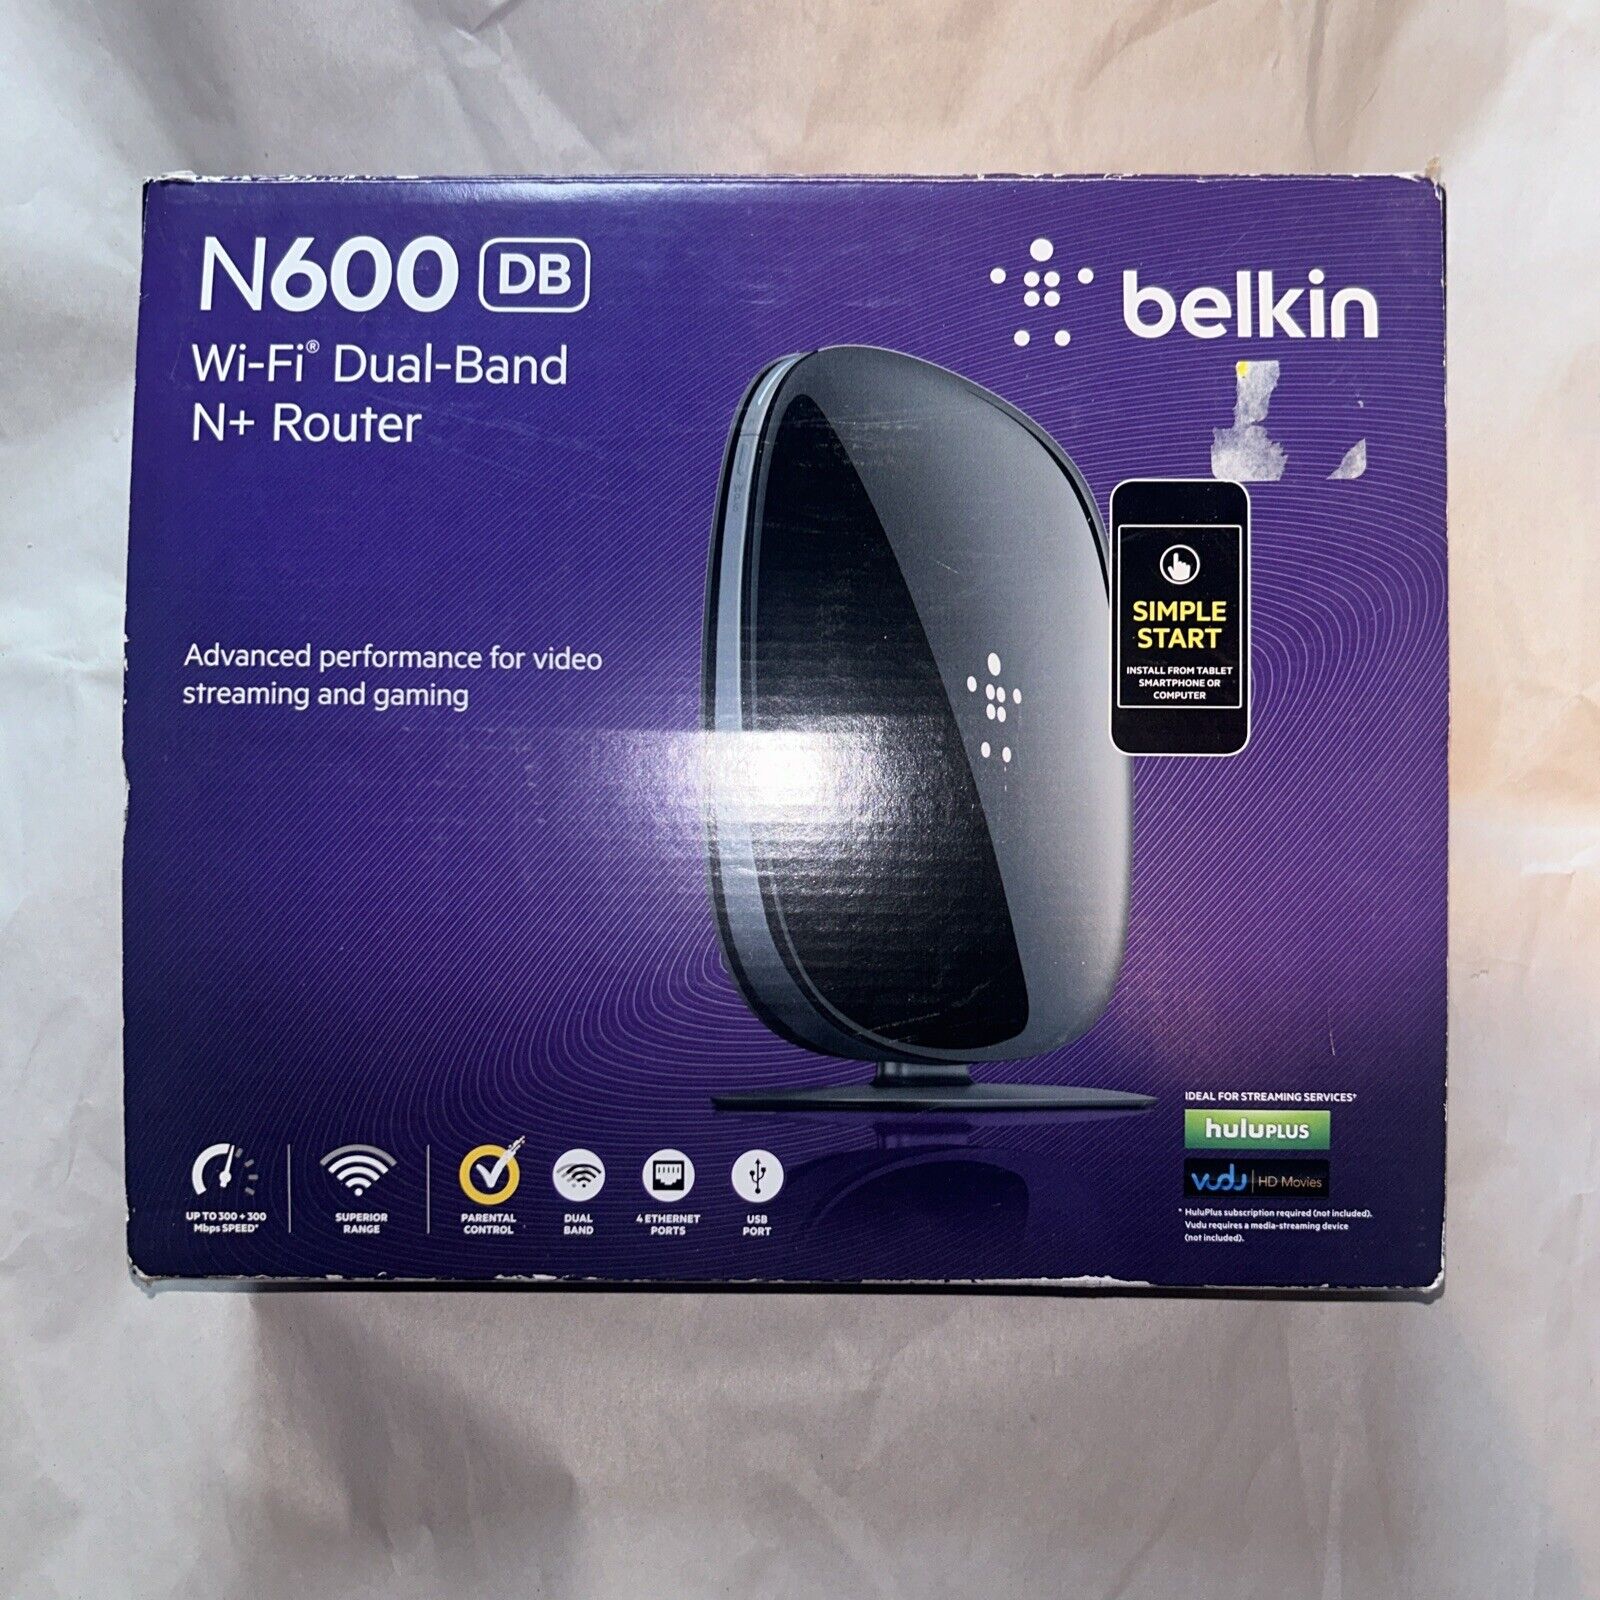 Belkin N600 DB Wi-Fi Dual Band N+ Wireless Router 300 Mbps